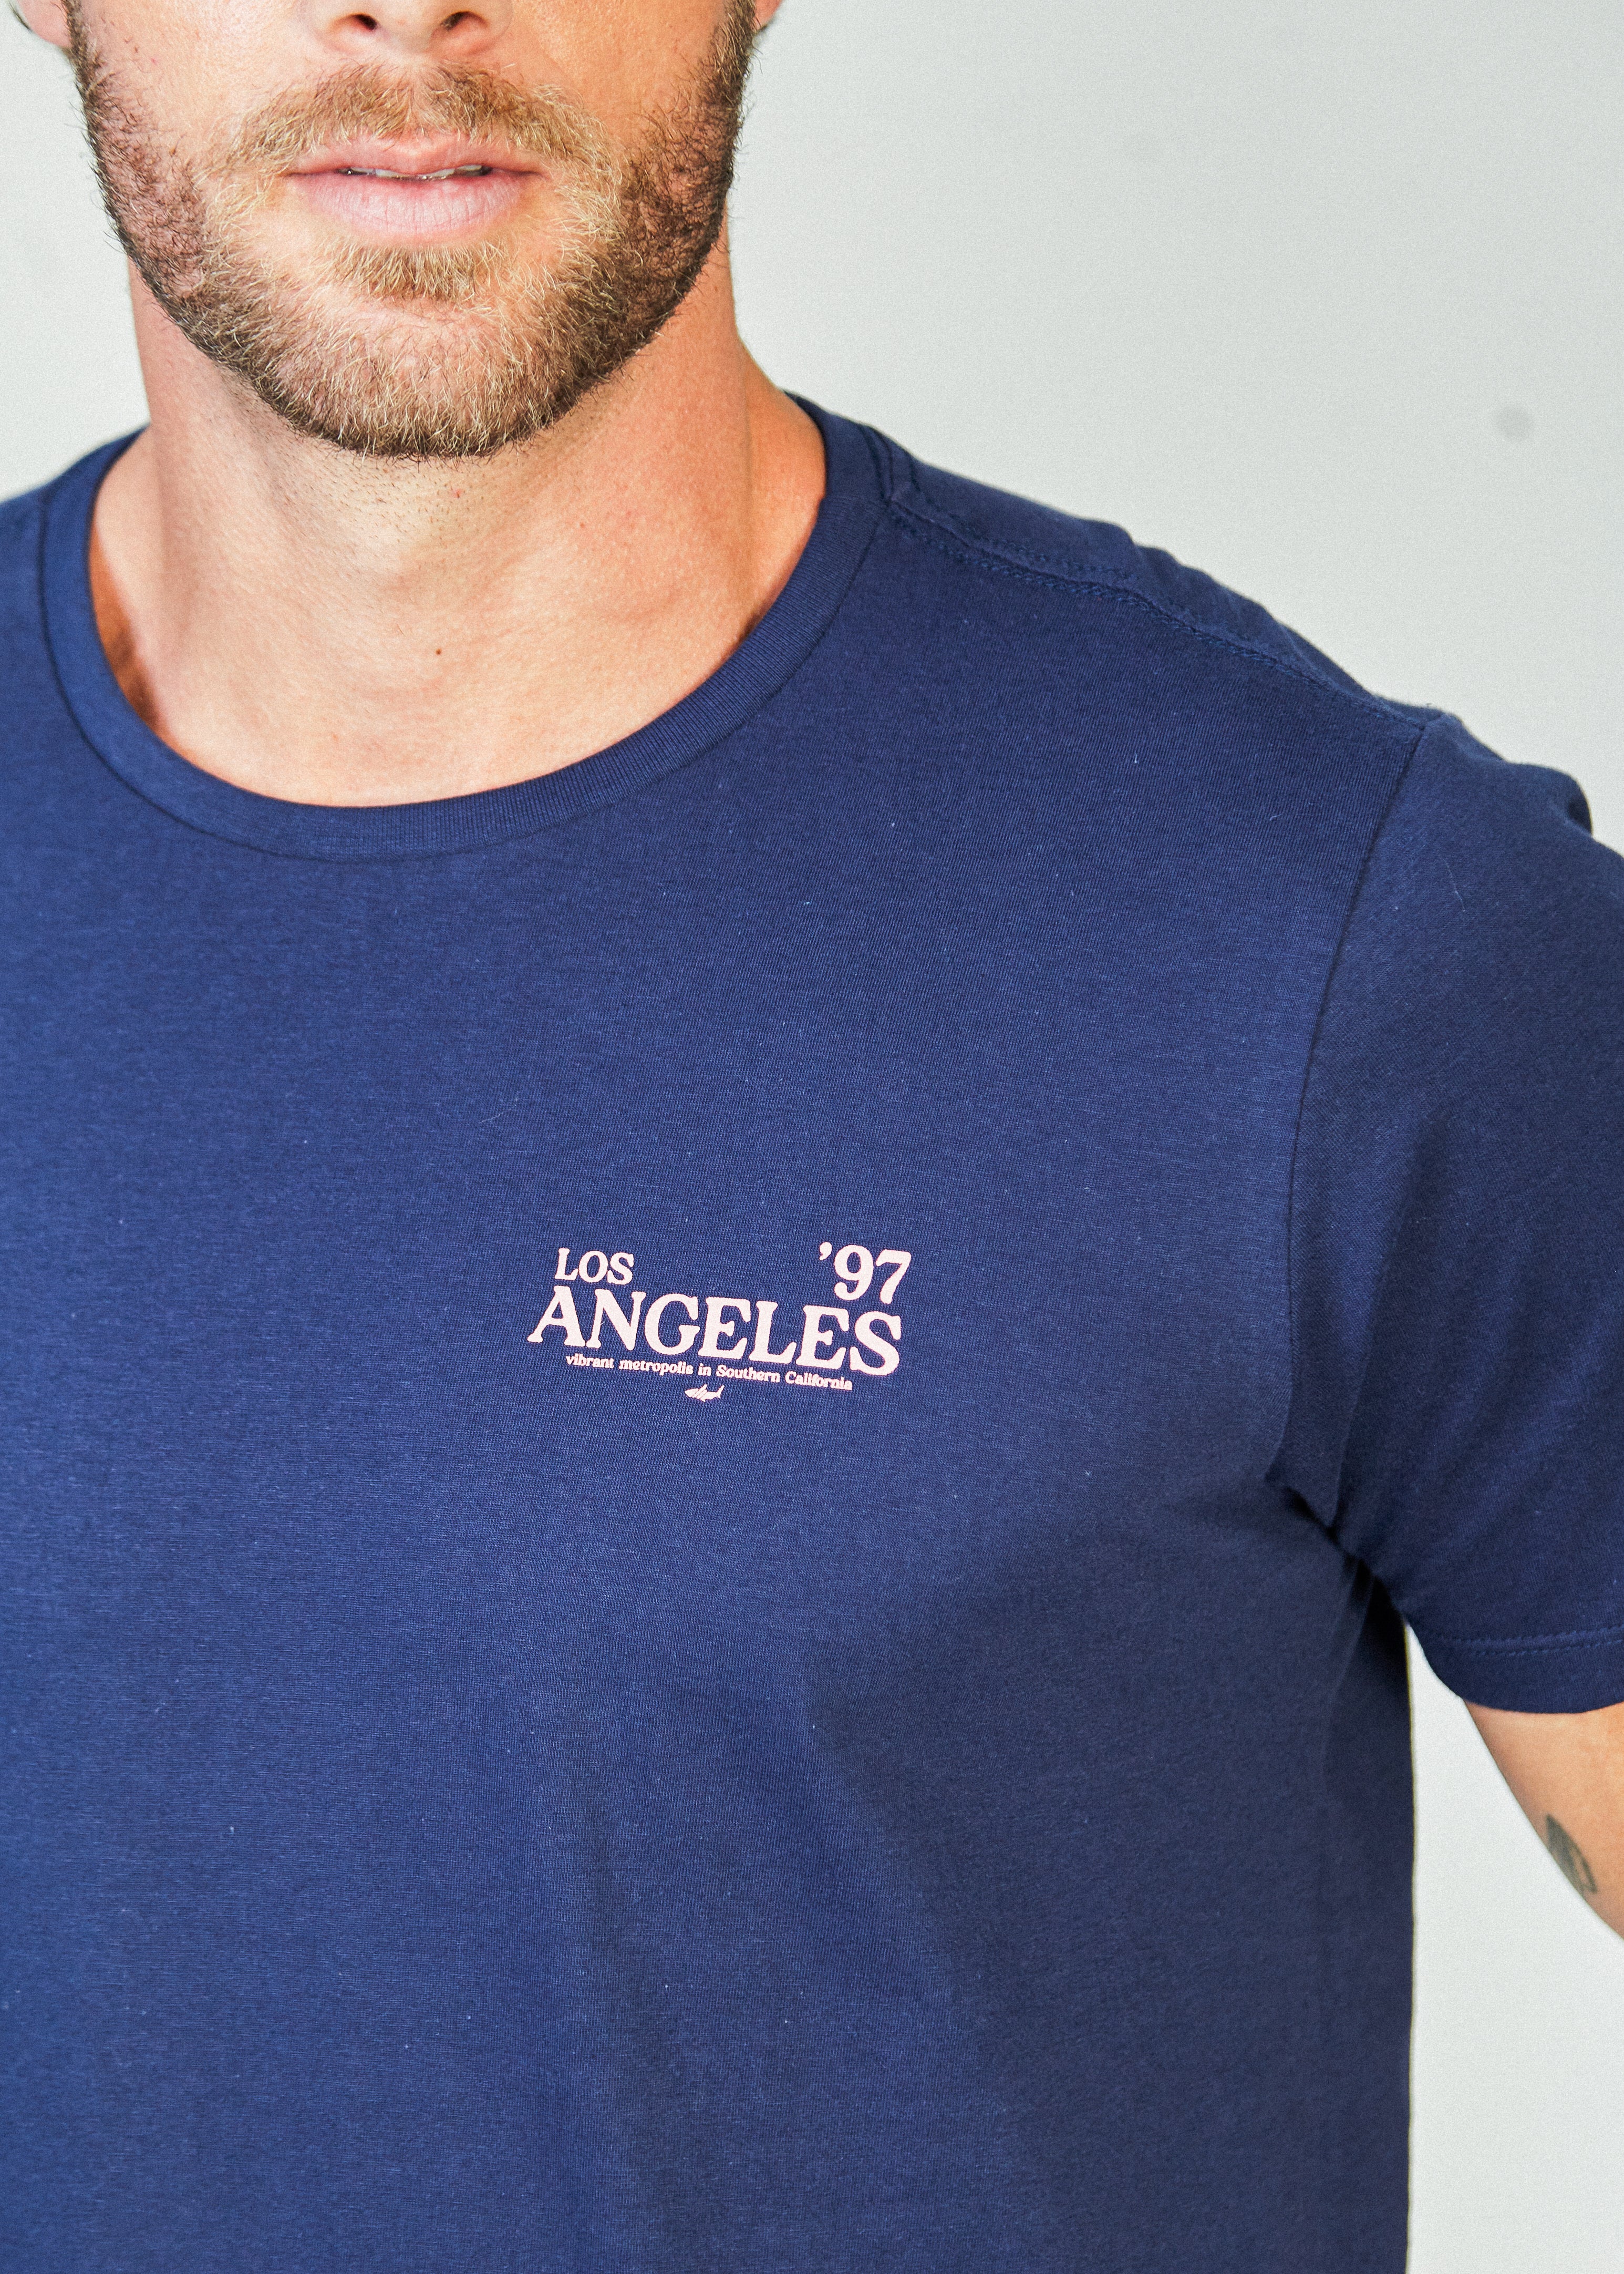 Camiseta Estampada Los Angeles - Azul Marinho